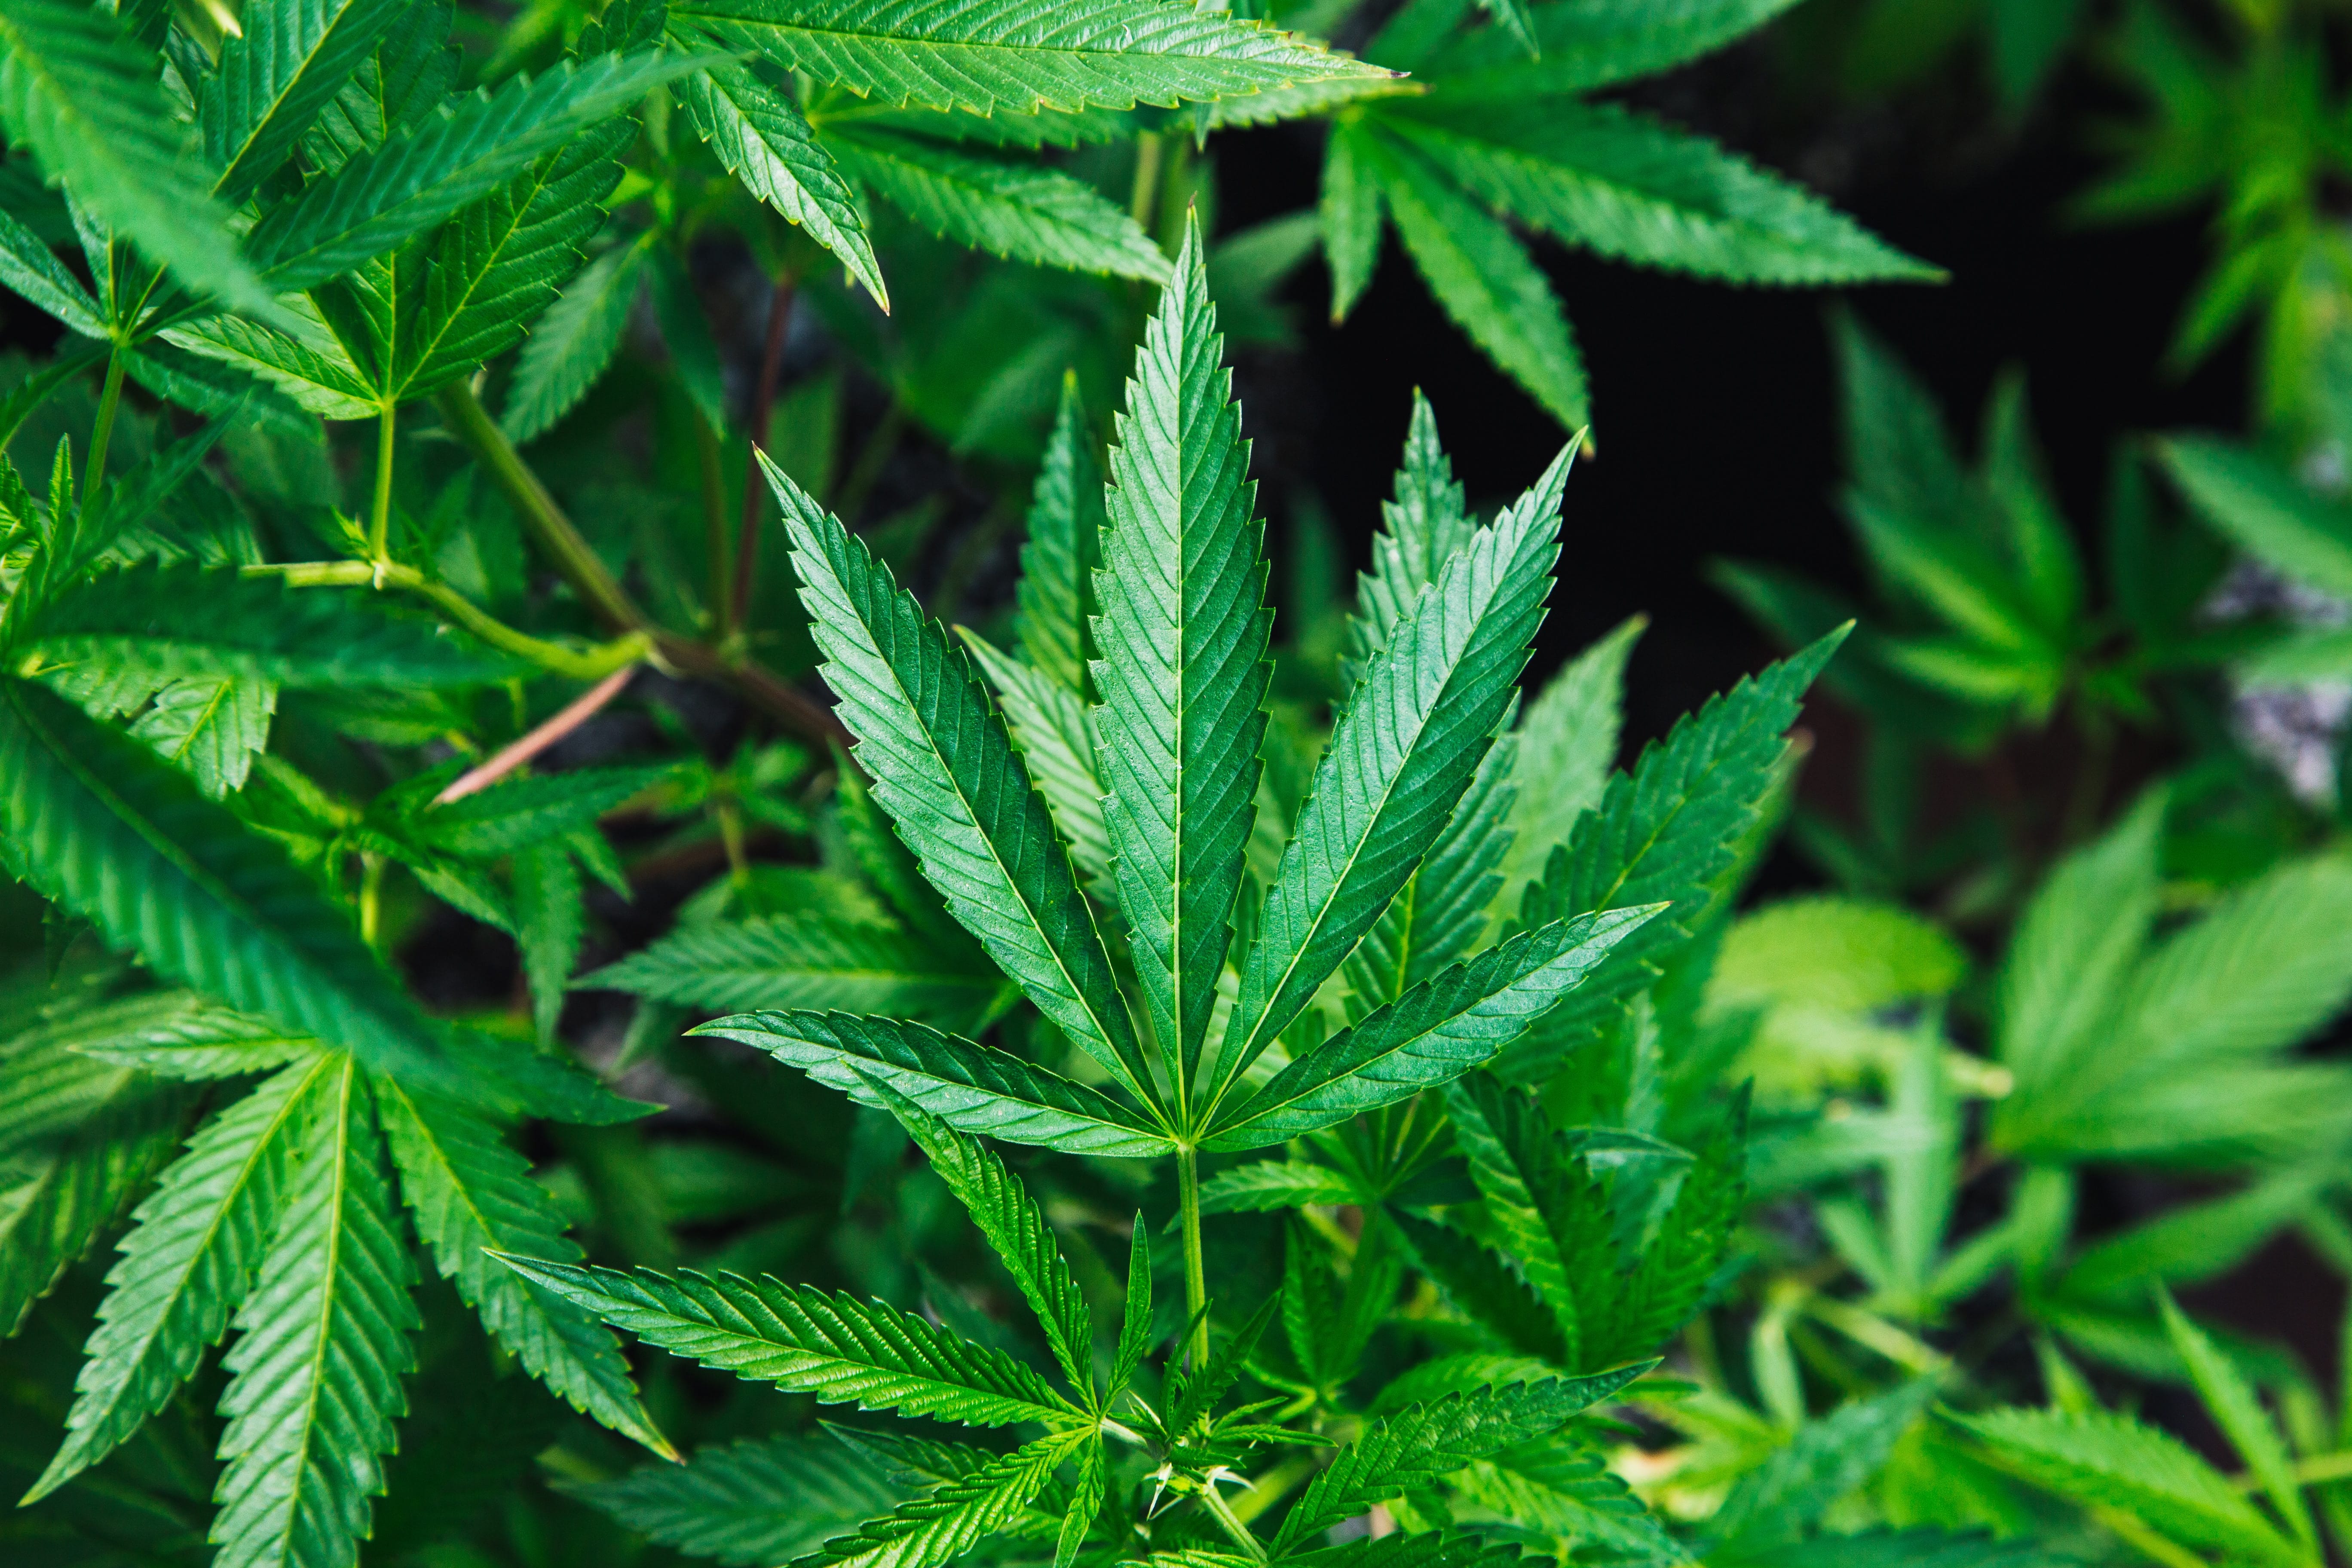 Close-up photo of cannabis plant; image by Rick Proctor, via Unsplash.com.